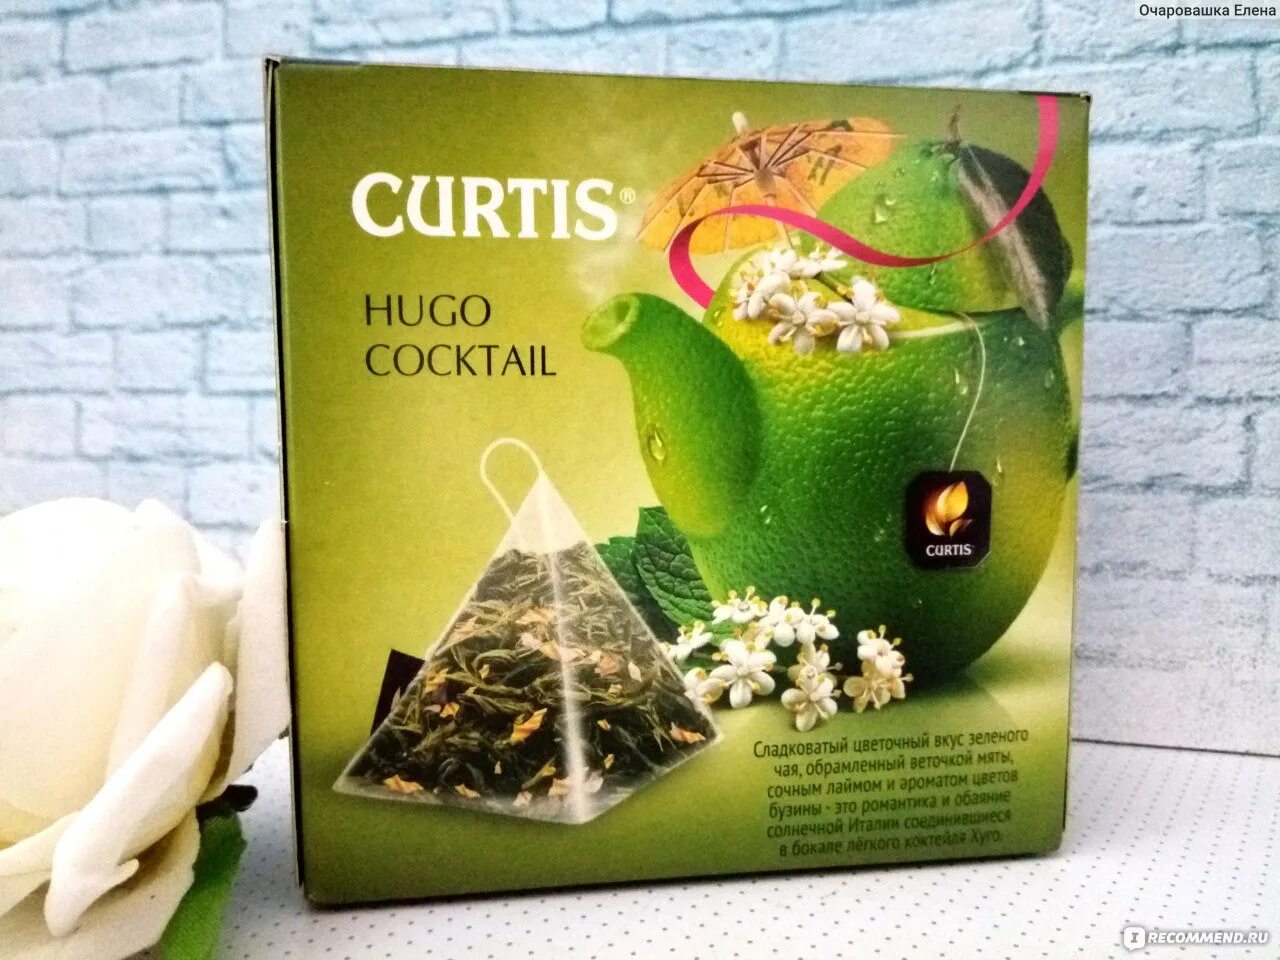 Curtis cocktail. Зеленый чай Кертис Hugo Cocktail. Чай зеленый Кертис Хуго коктейль. Чай Кертис релакс. Хуго коктейль чай Куртис Кертис.